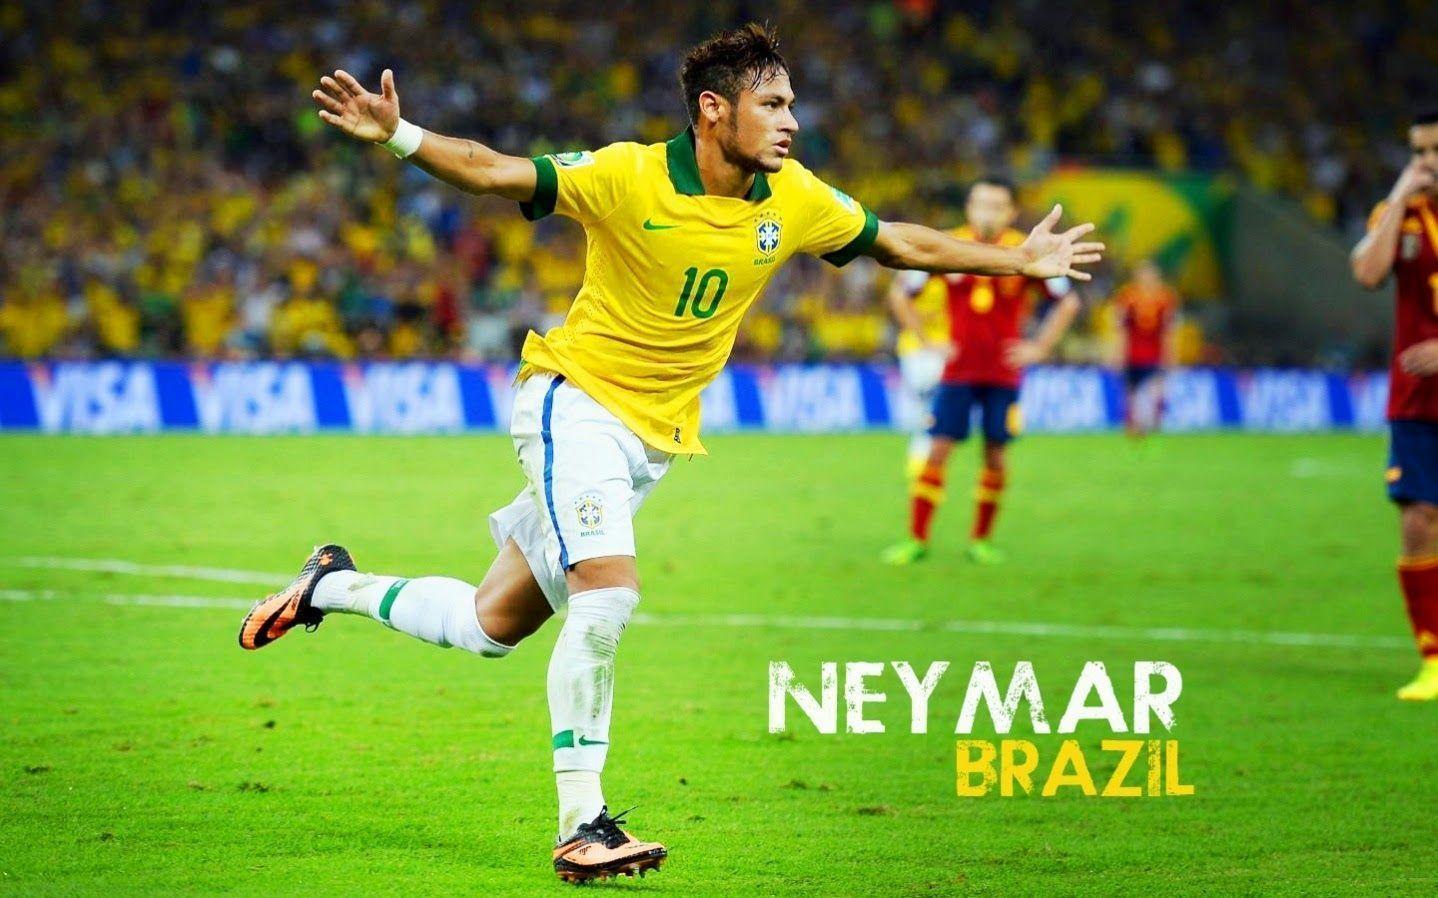 Brazil Football Team Wallpaper 2014 and Photo